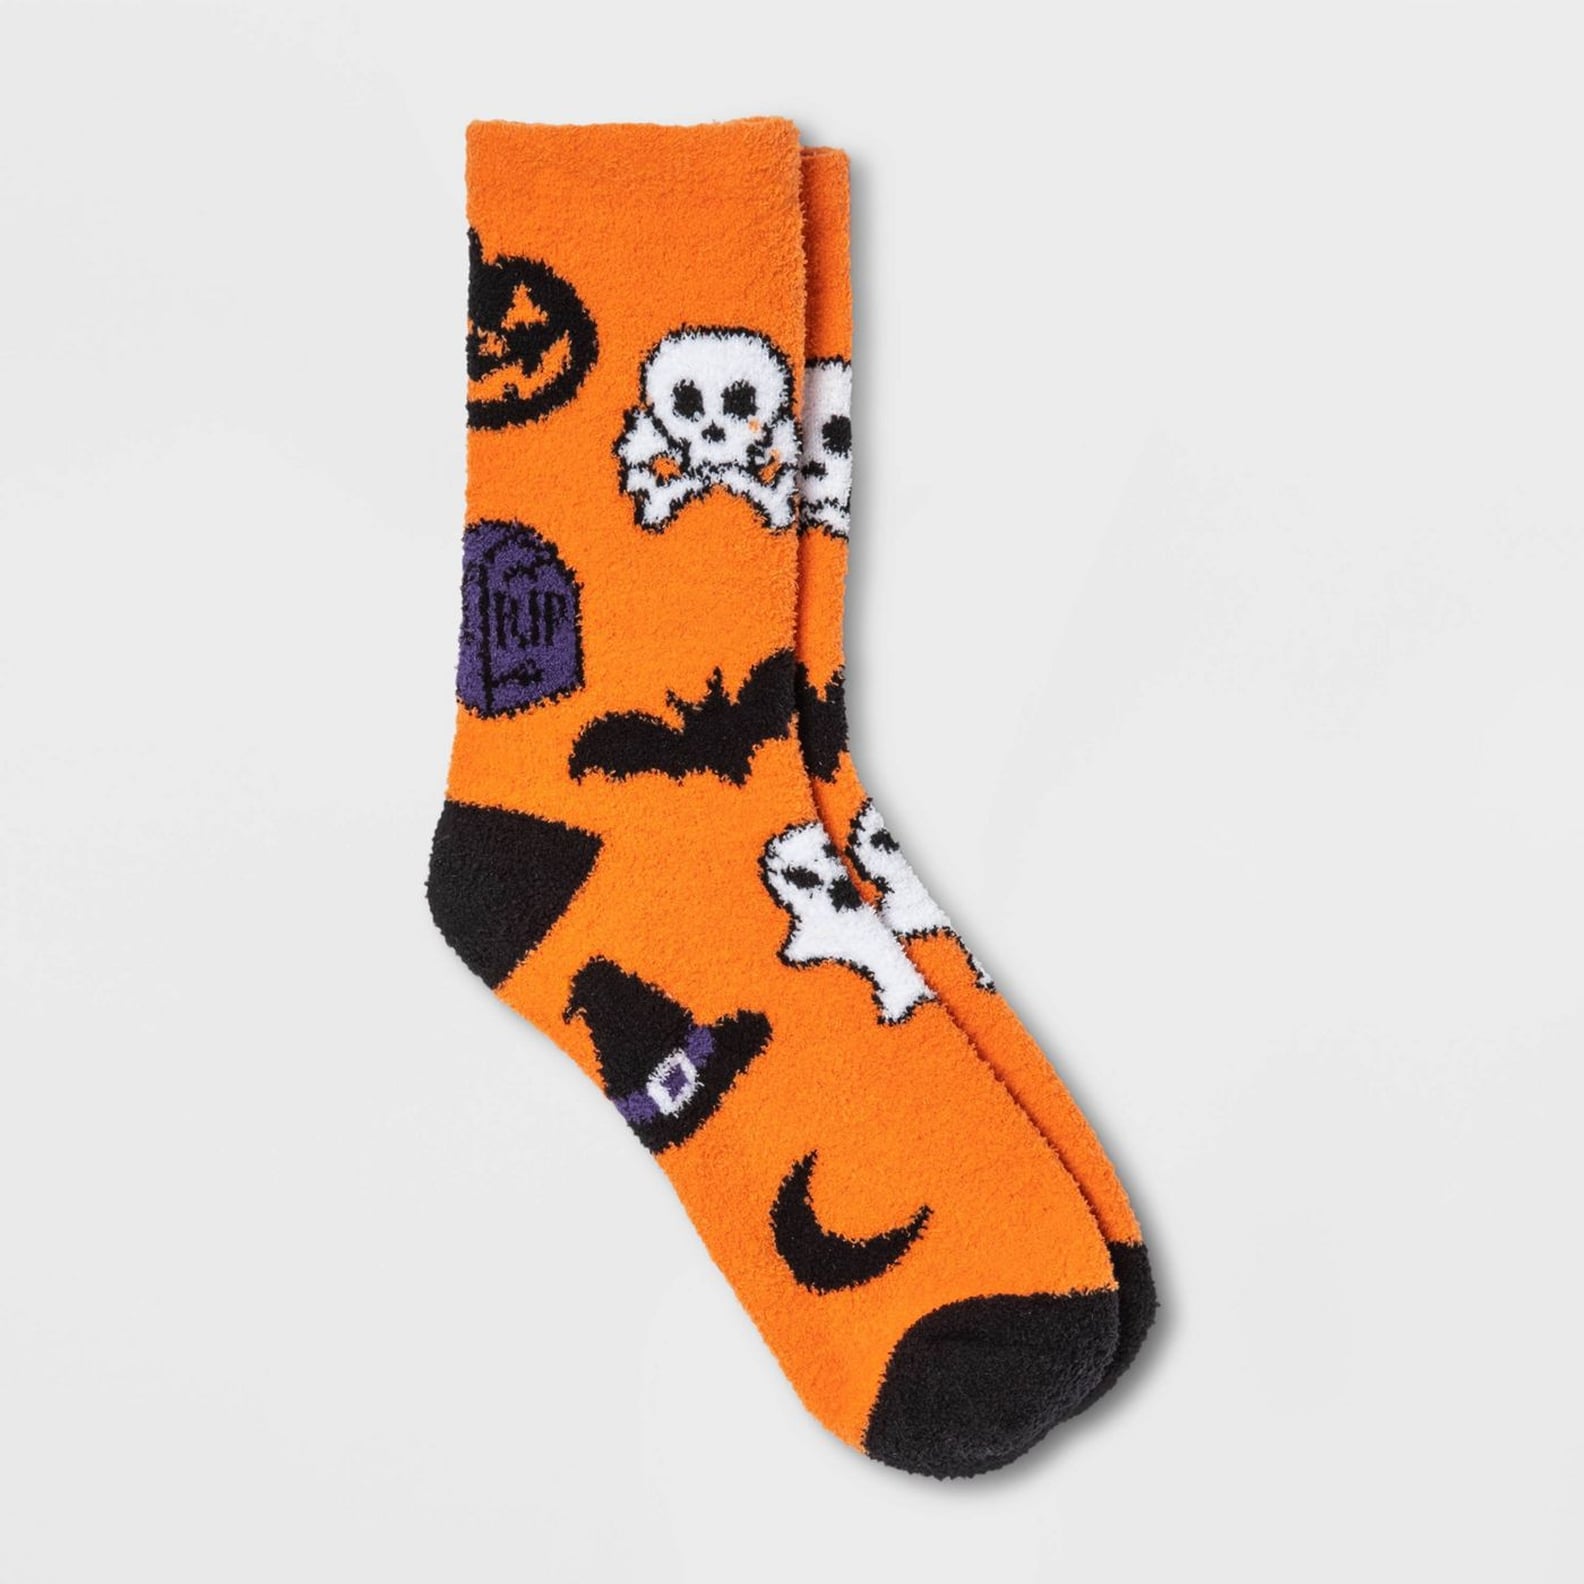 Cute Halloween Socks to Complete Your Haunted Attire | POPSUGAR Smart ...